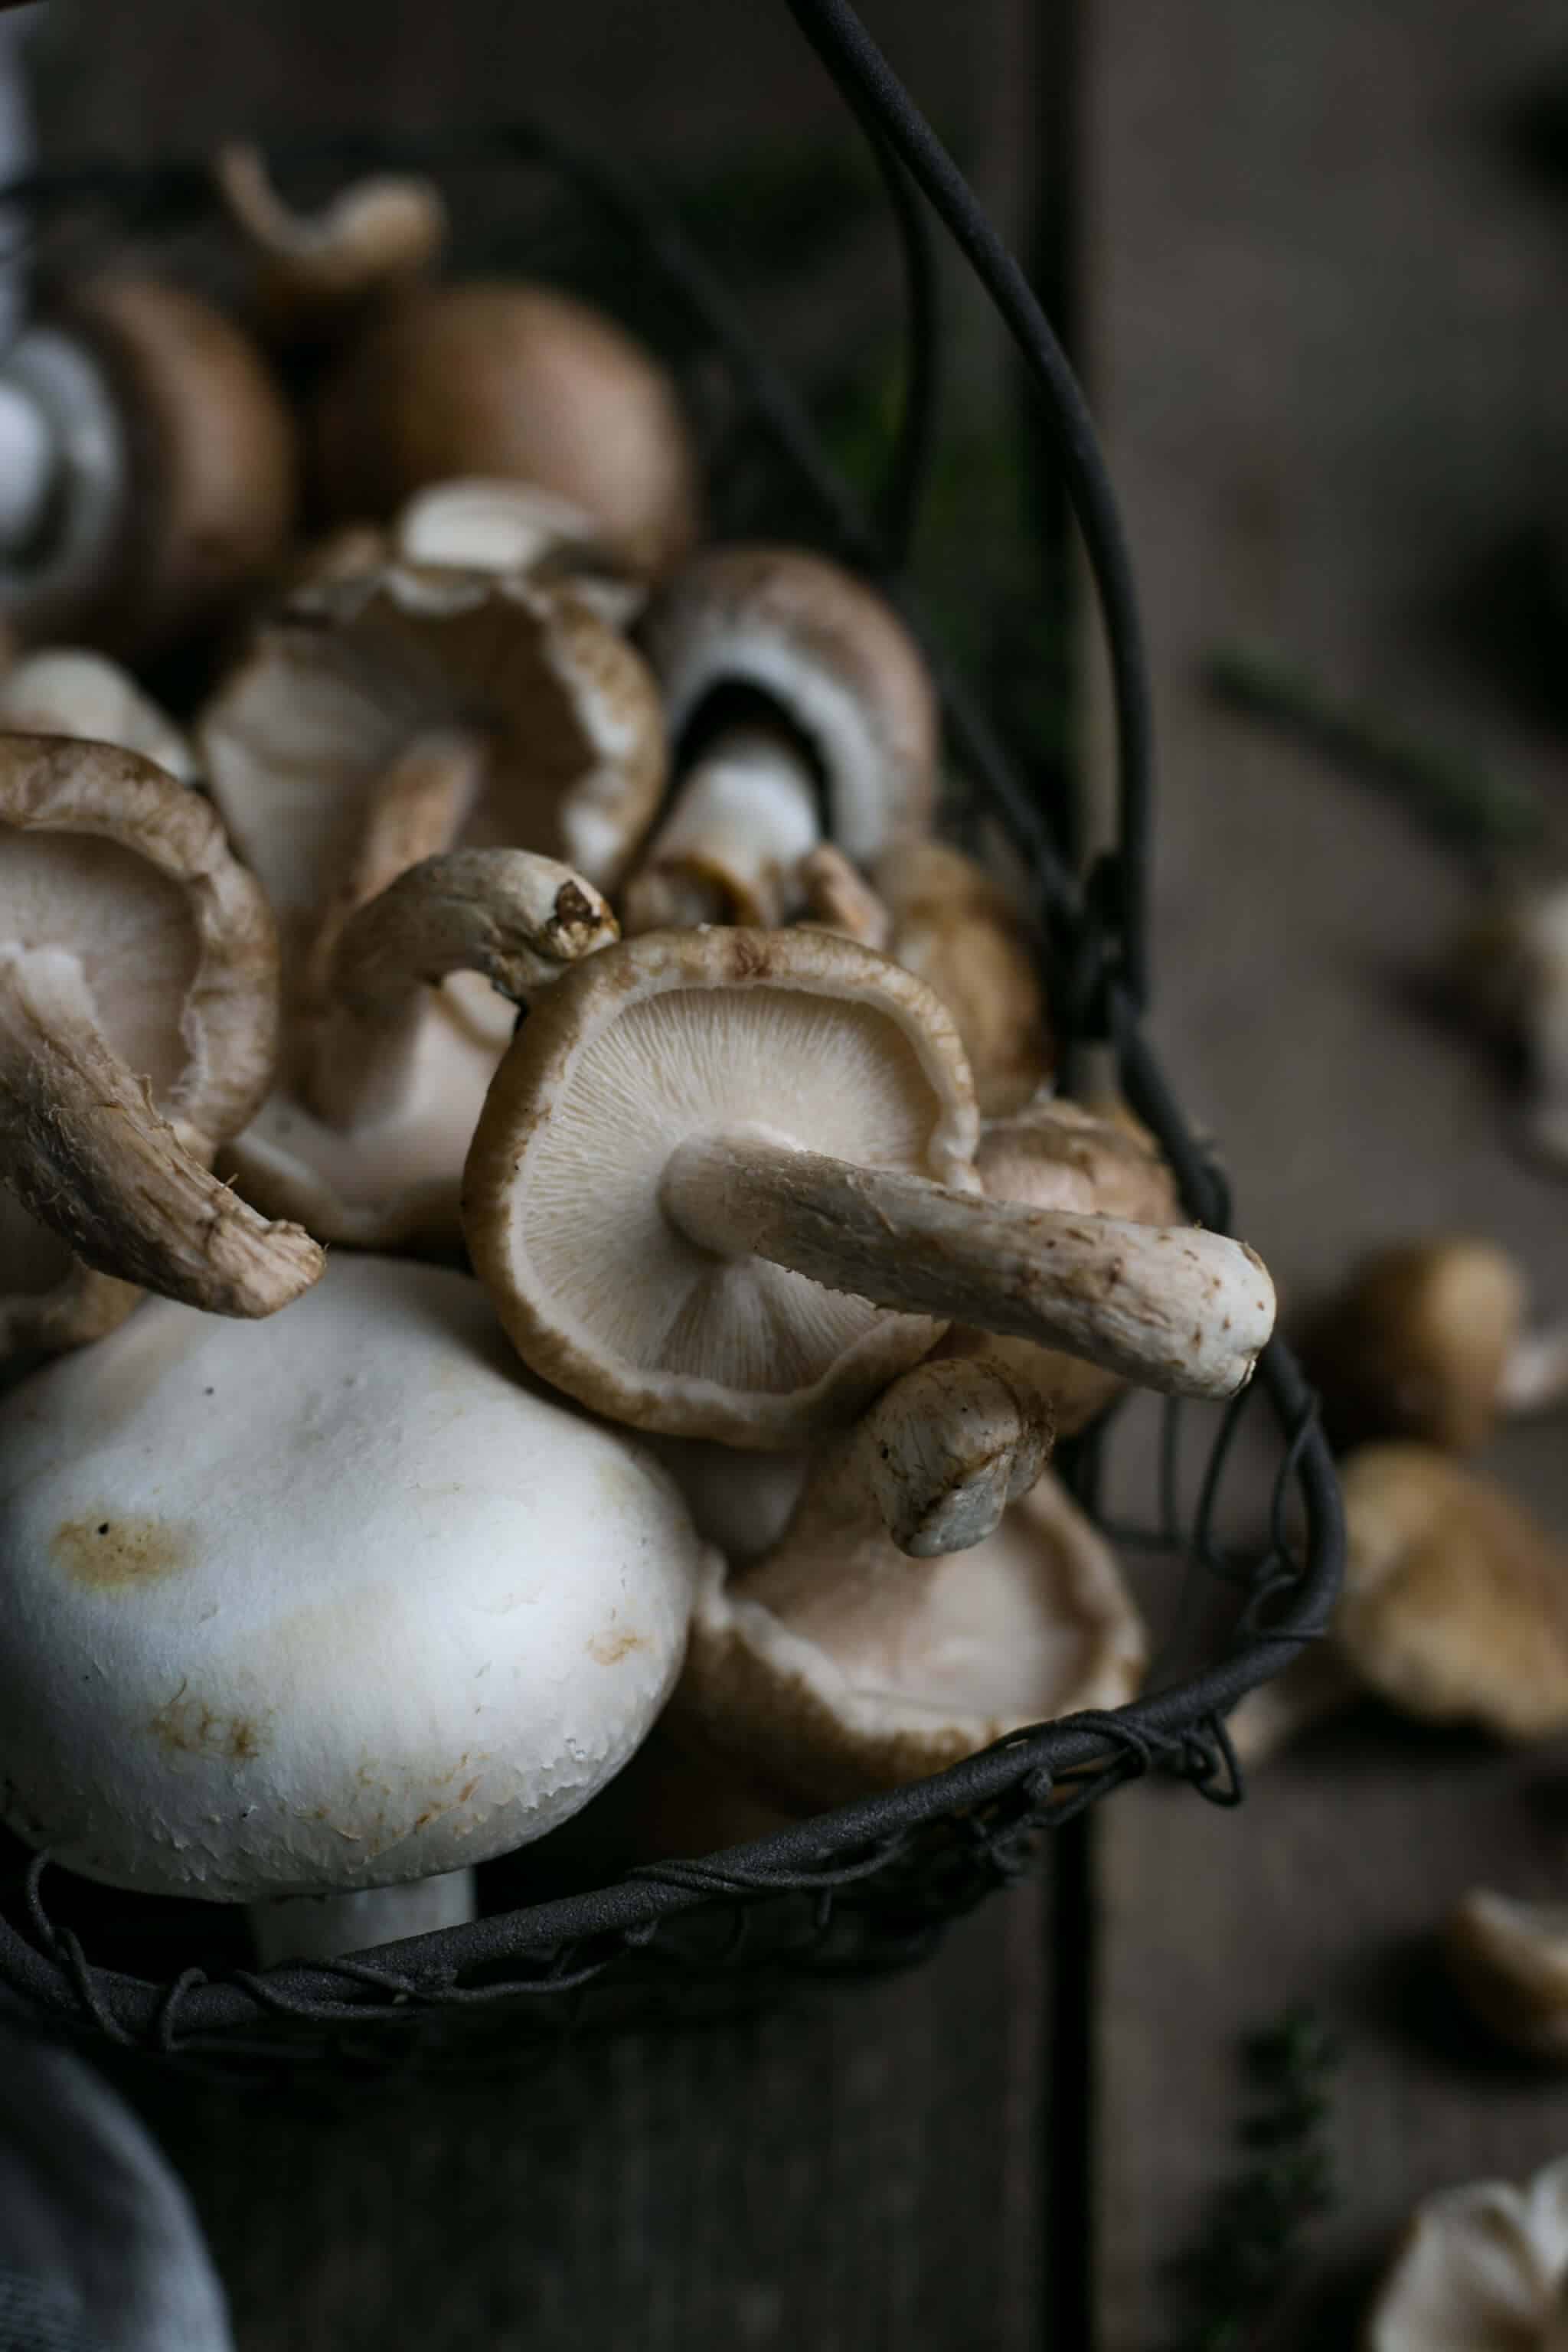 Delicious mushroom gnocchi with fresh thyme | via @annabanana.co